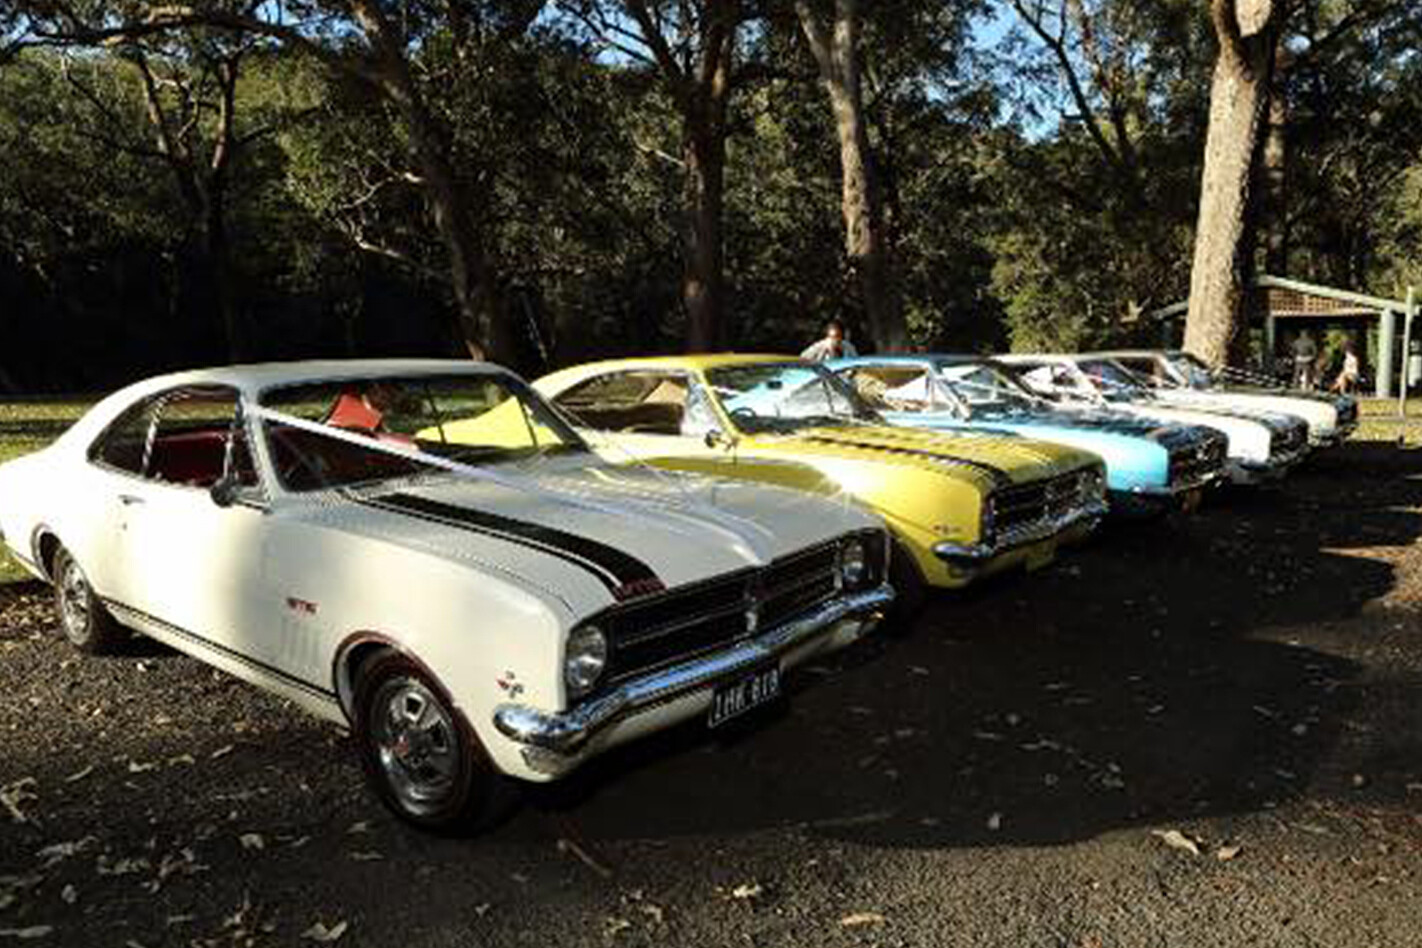 Shane Robinson's Holden Monaro wedding cars